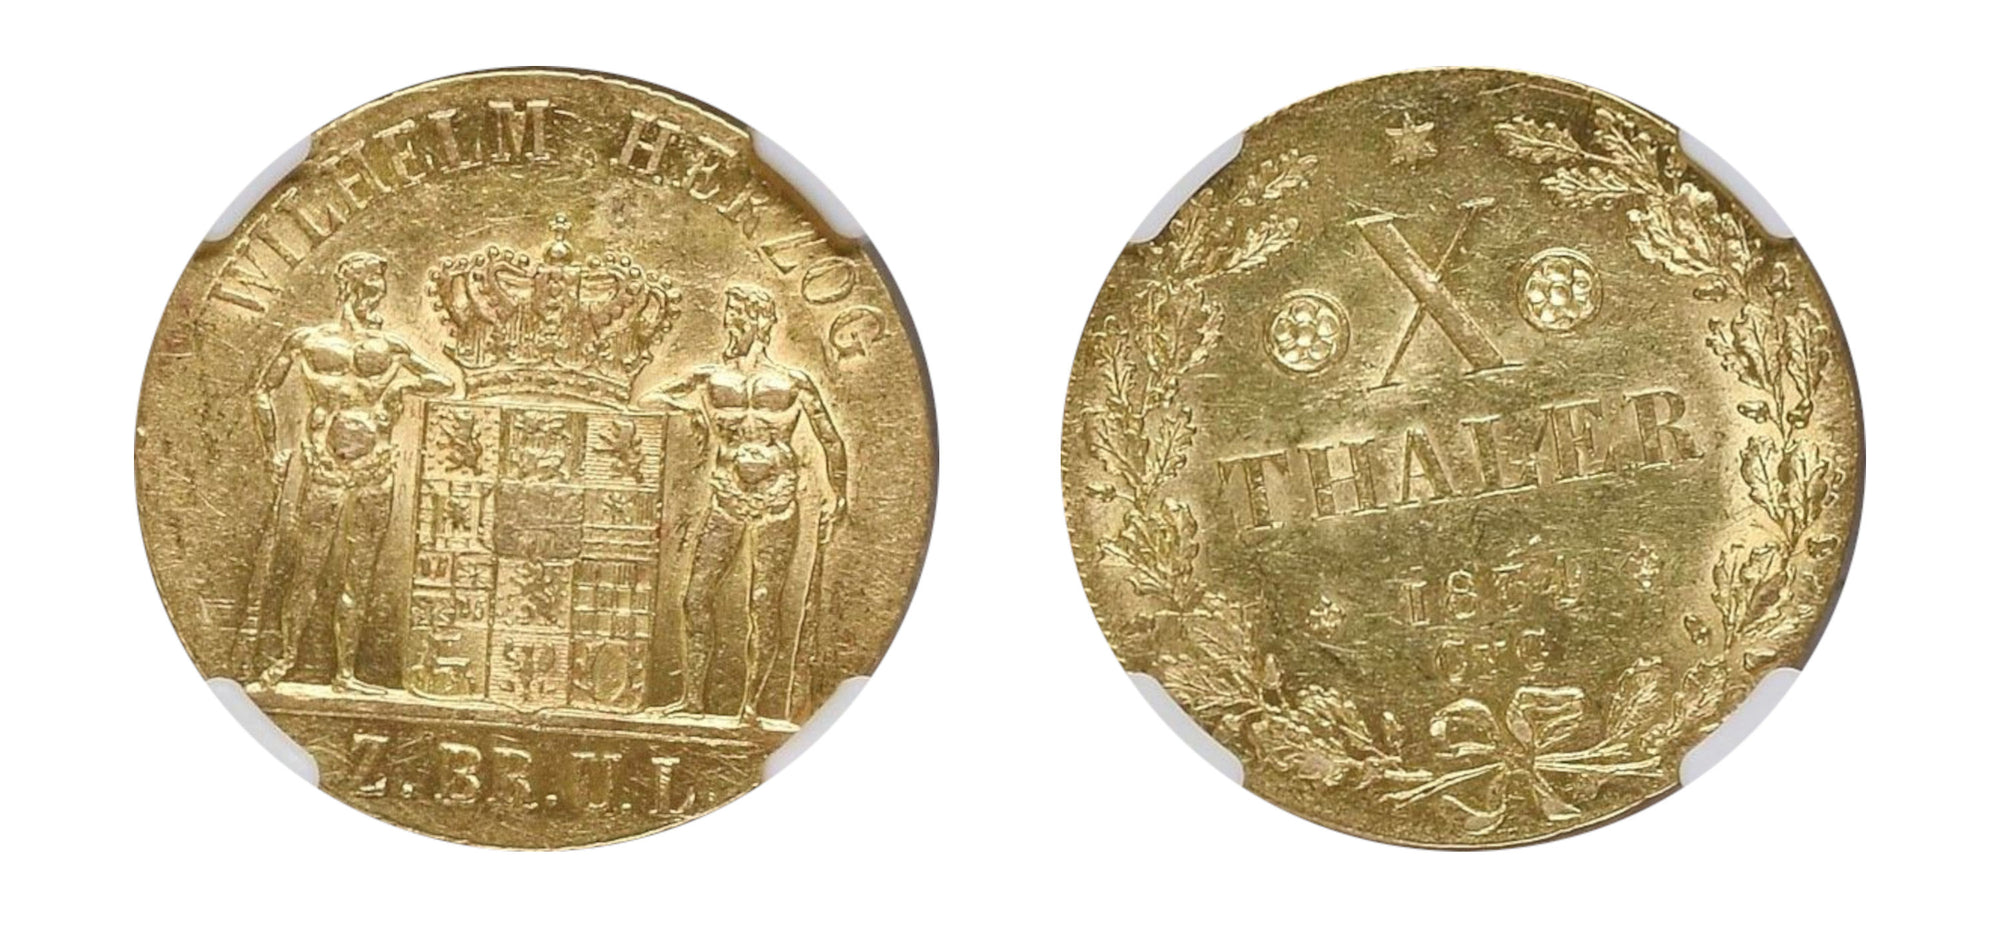 1834-Germany Gold 10 Taler NGC MS 61 - Hard Asset Management, Inc